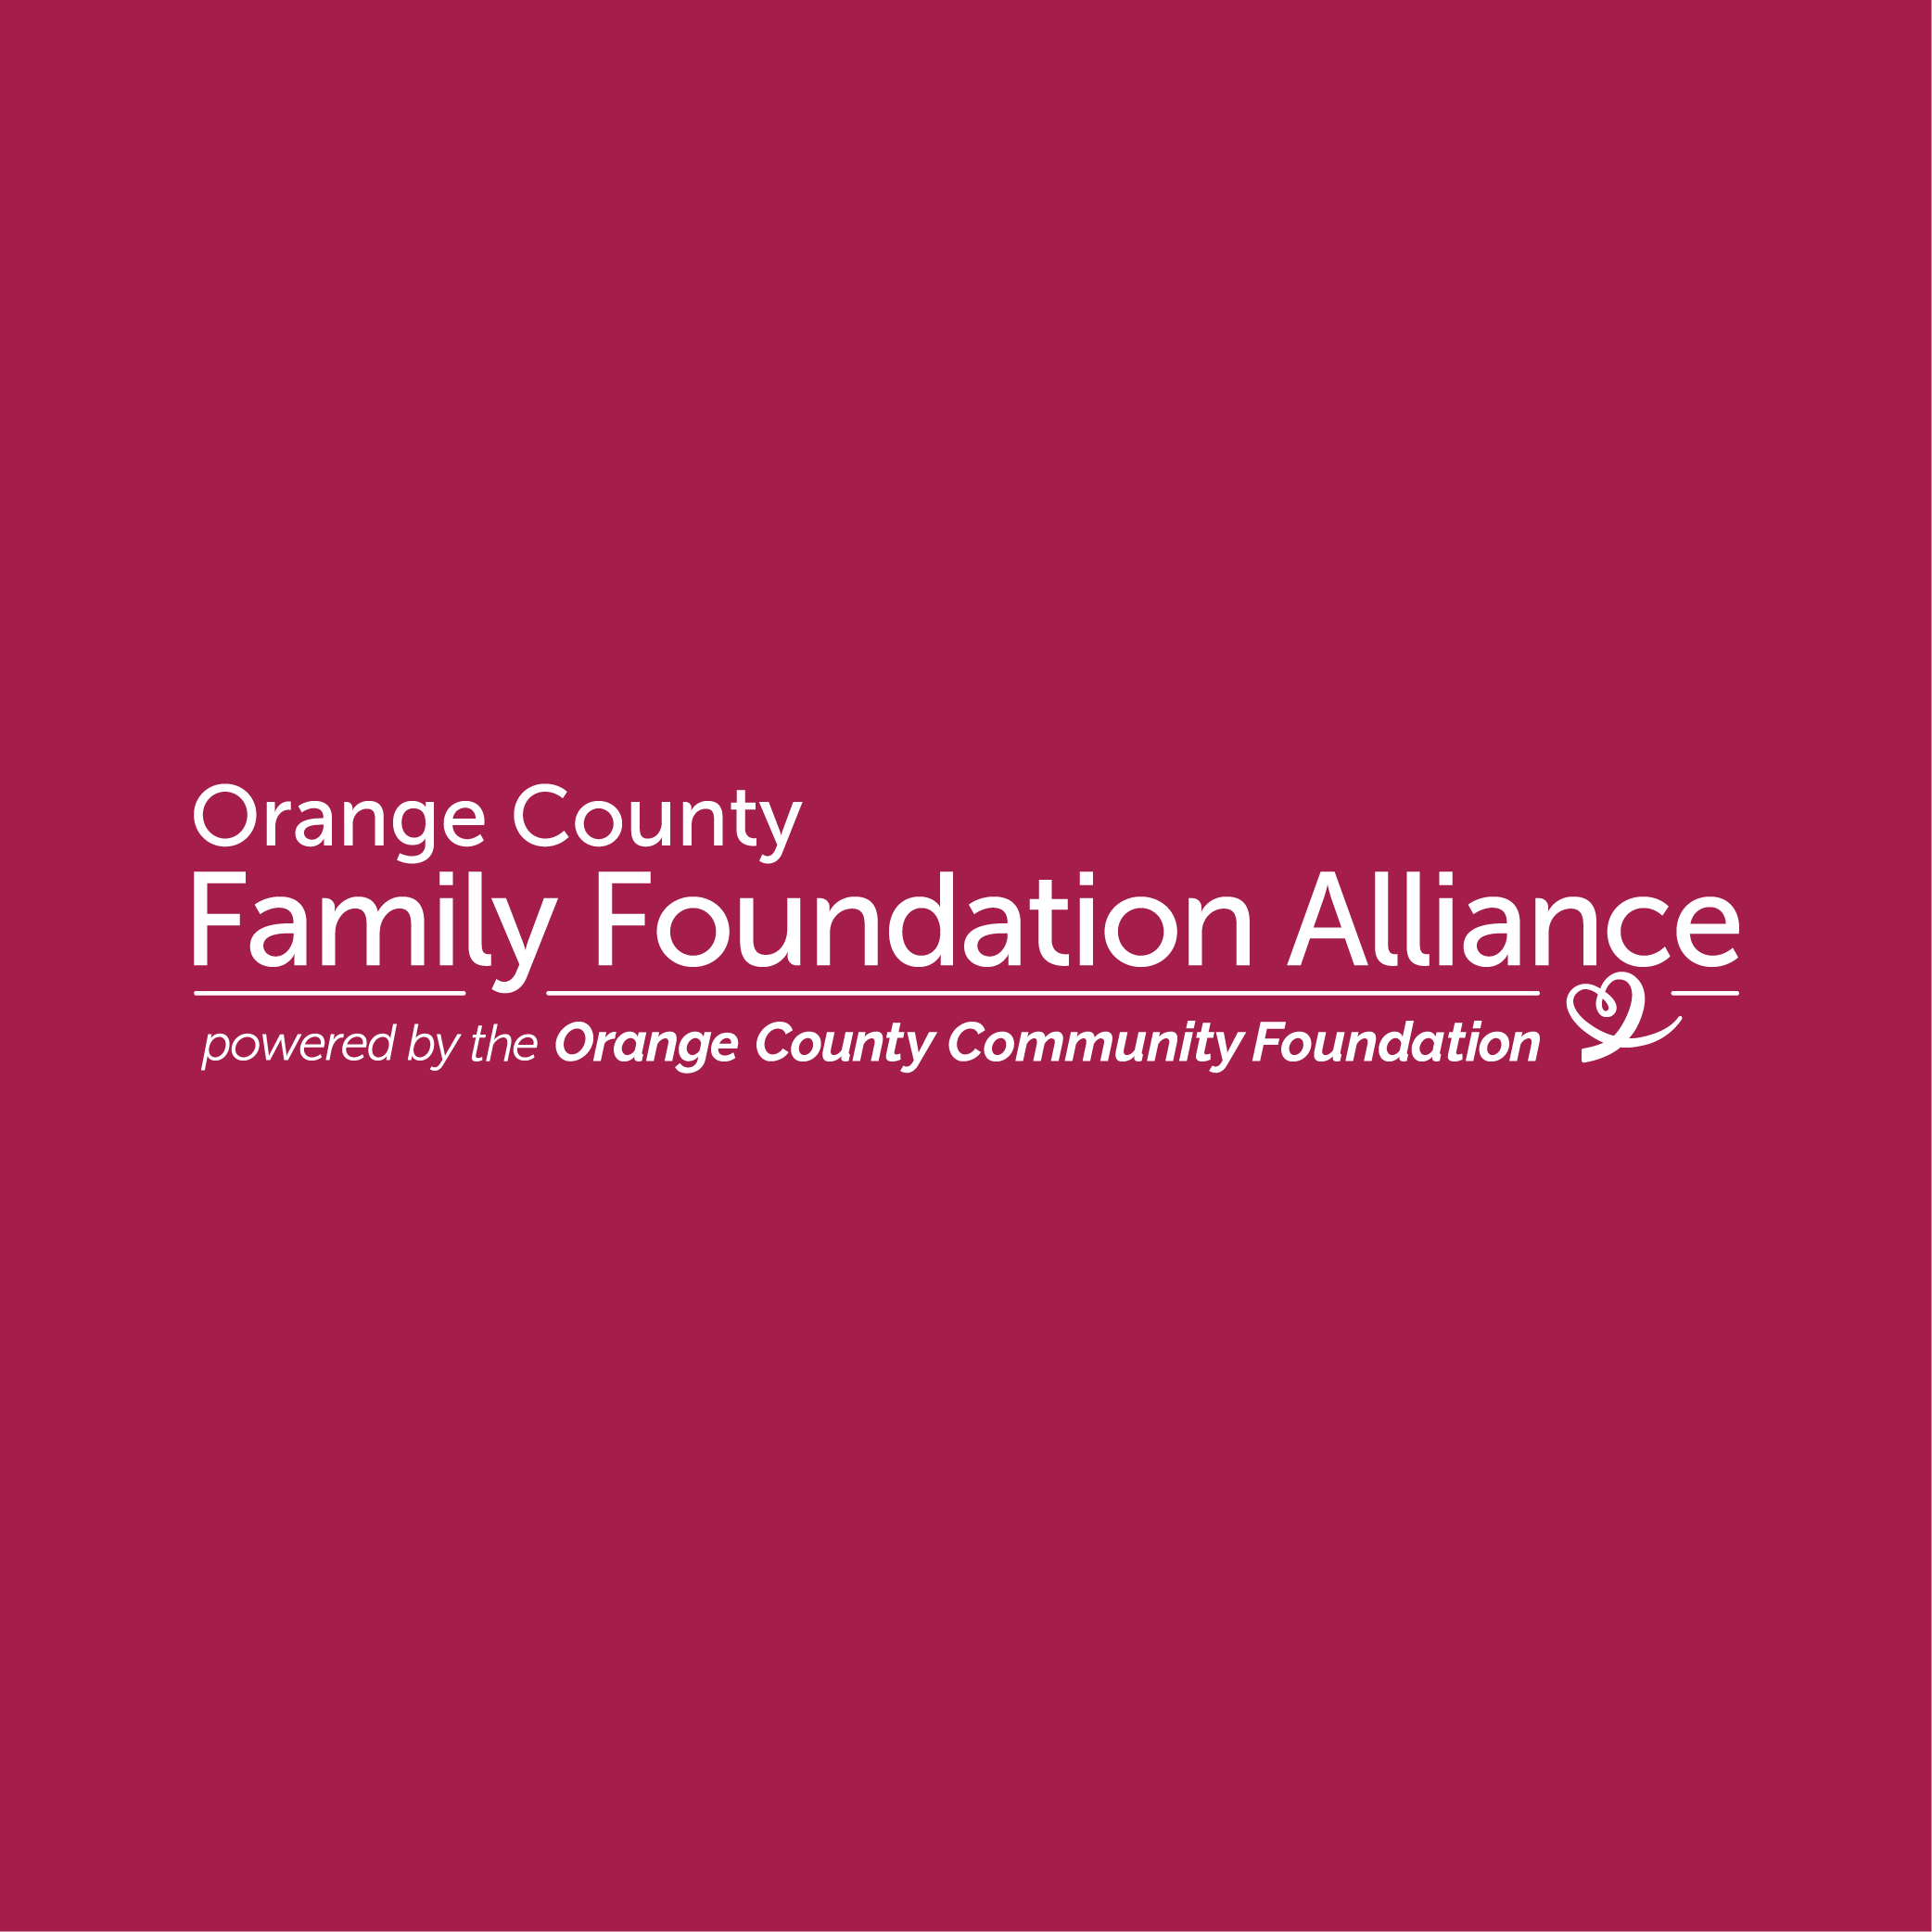 Orange County Family Foundation Alliance